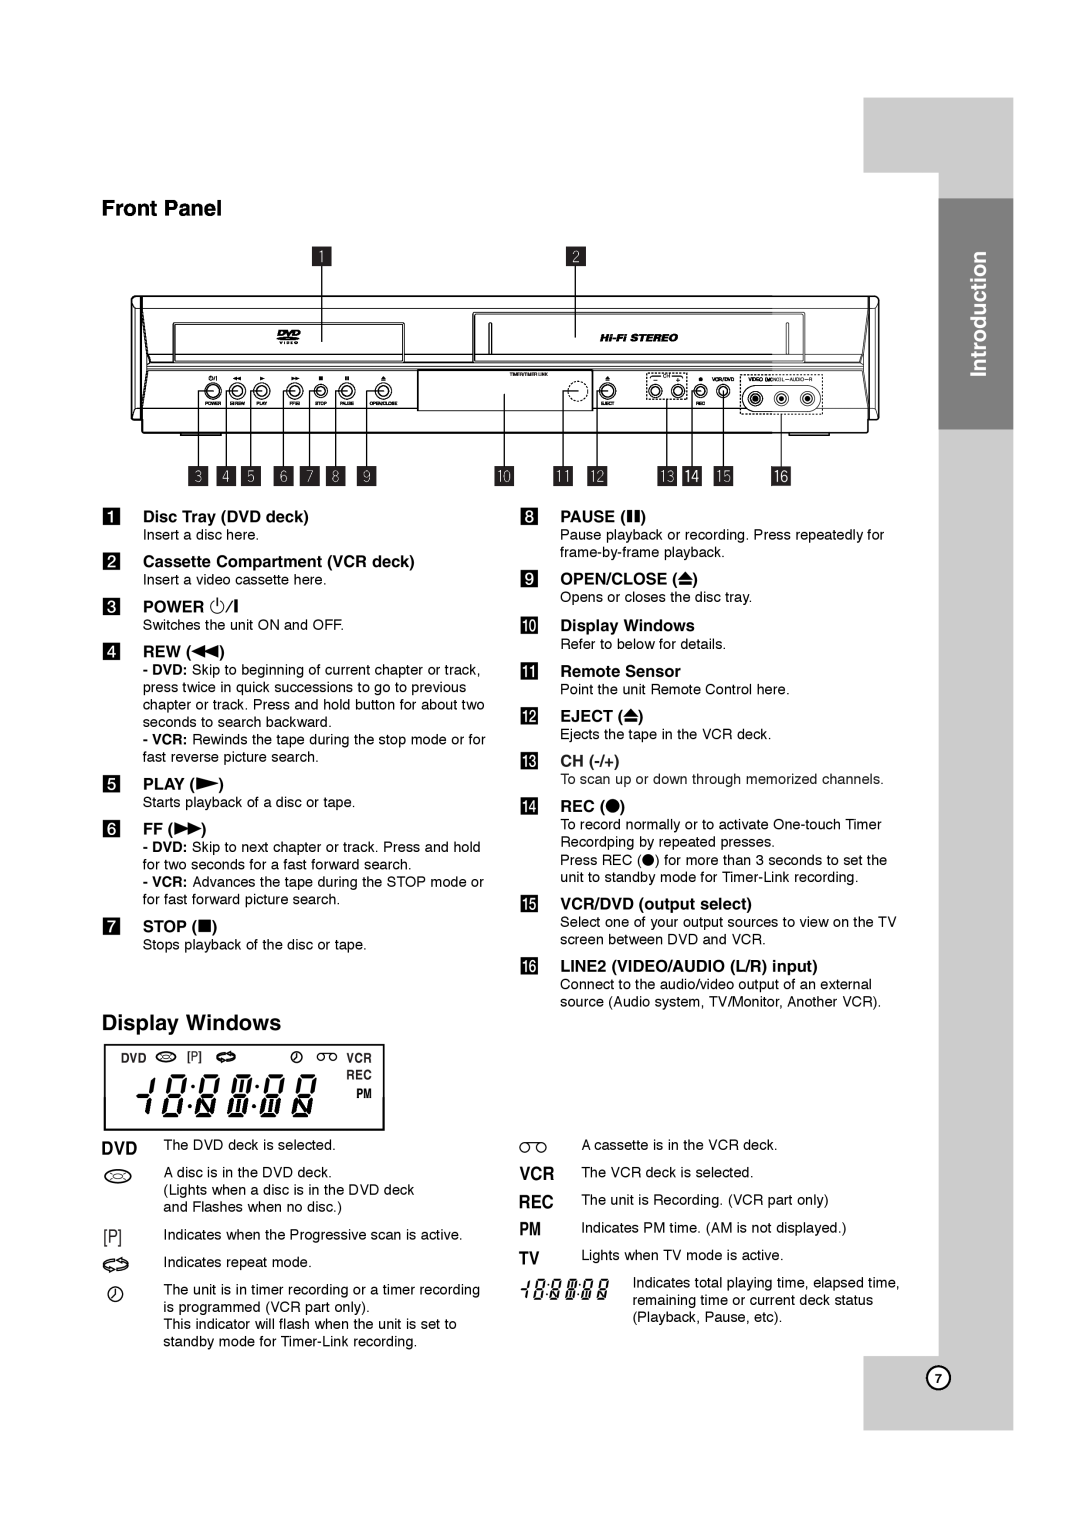 JVC HR-XVC40B manual Front Panel, Display Windows, a Disc Tray DVD deck, b Cassette Compartment VCR deck, c POWER, d REW m 